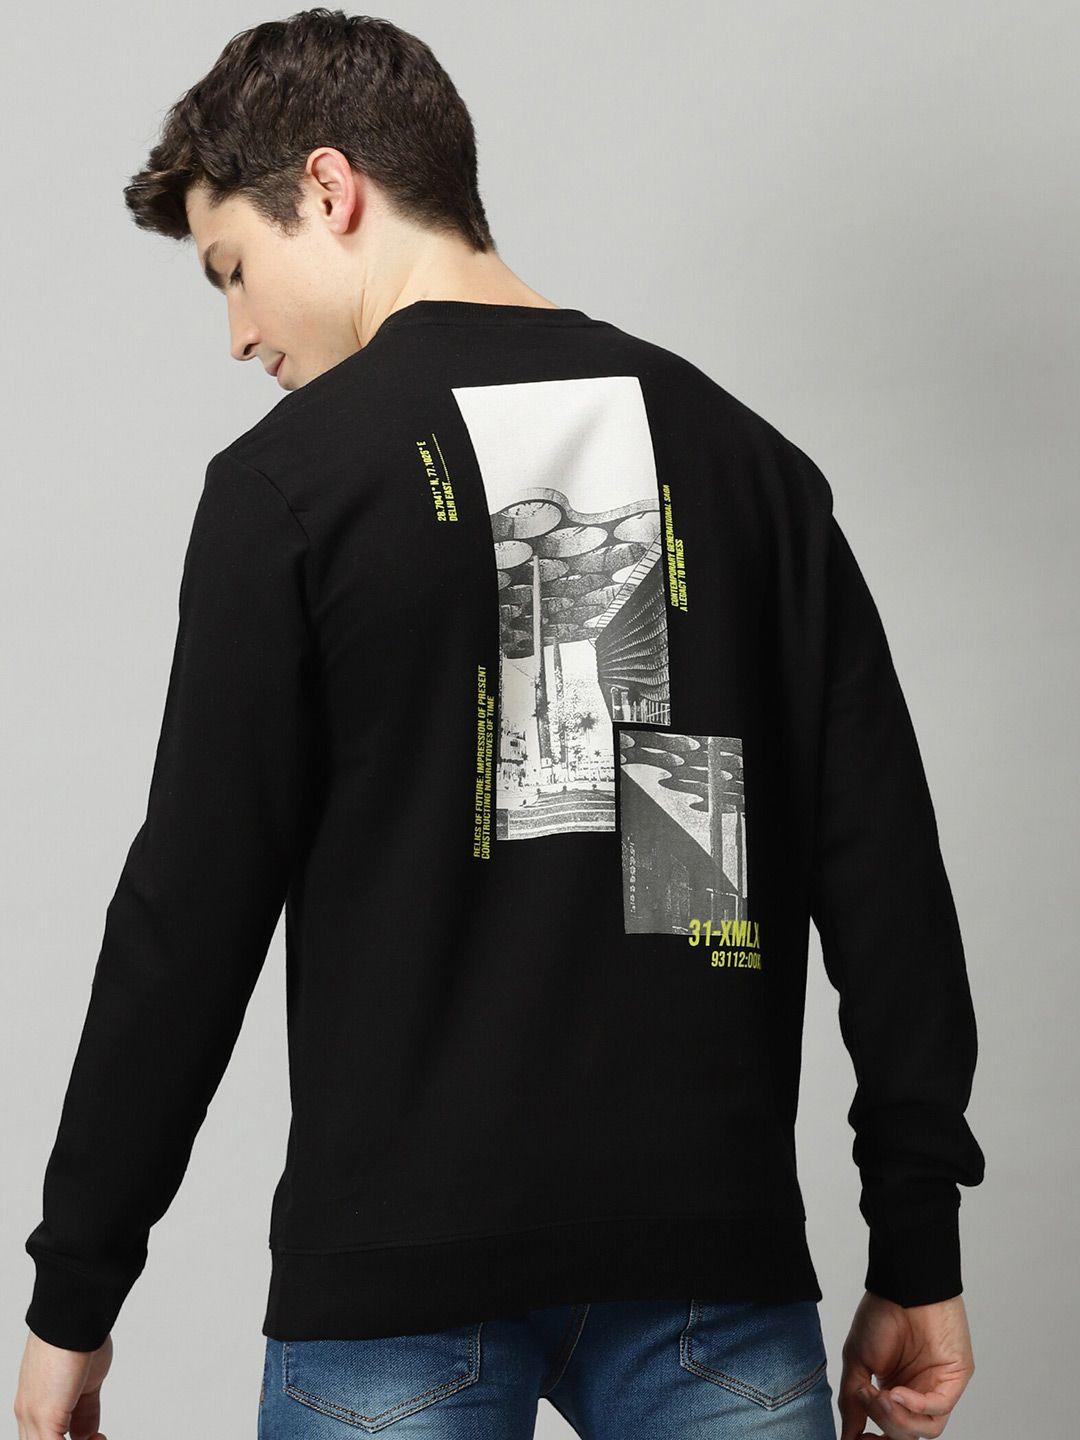 the hollander graphic printed cotton pullover sweatshirts